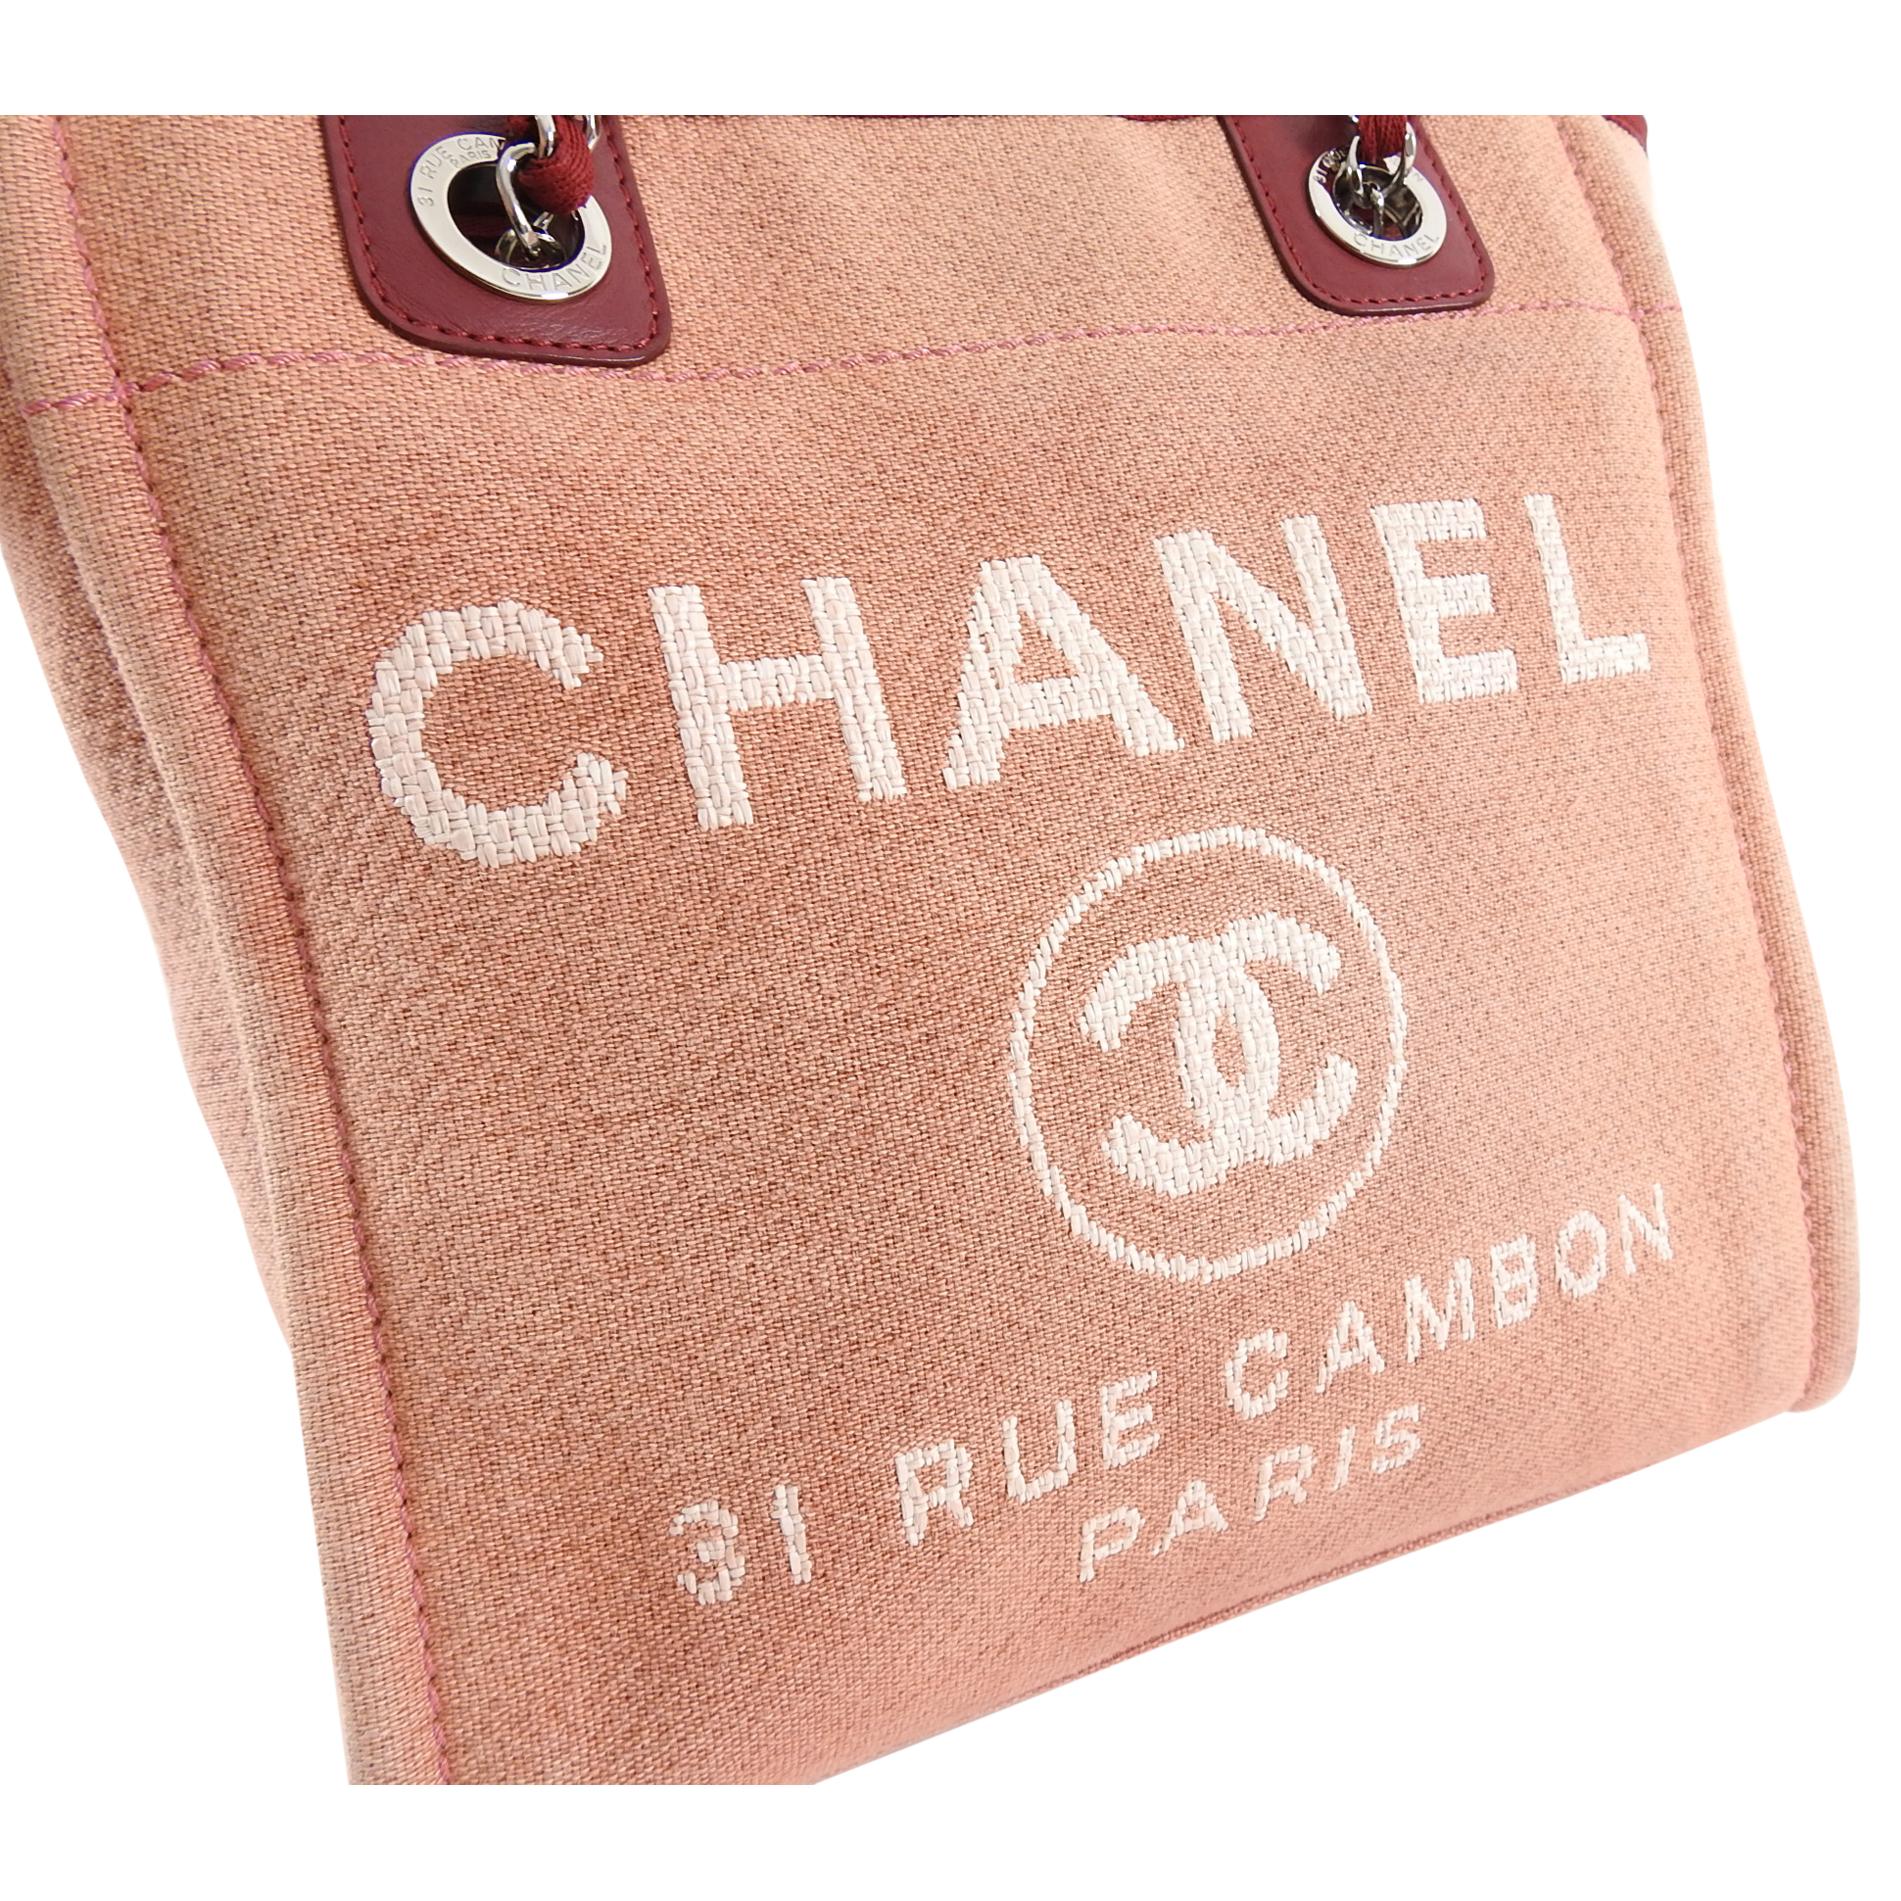 Chanel Red Mini Deauville Fabric Tote Bag 1